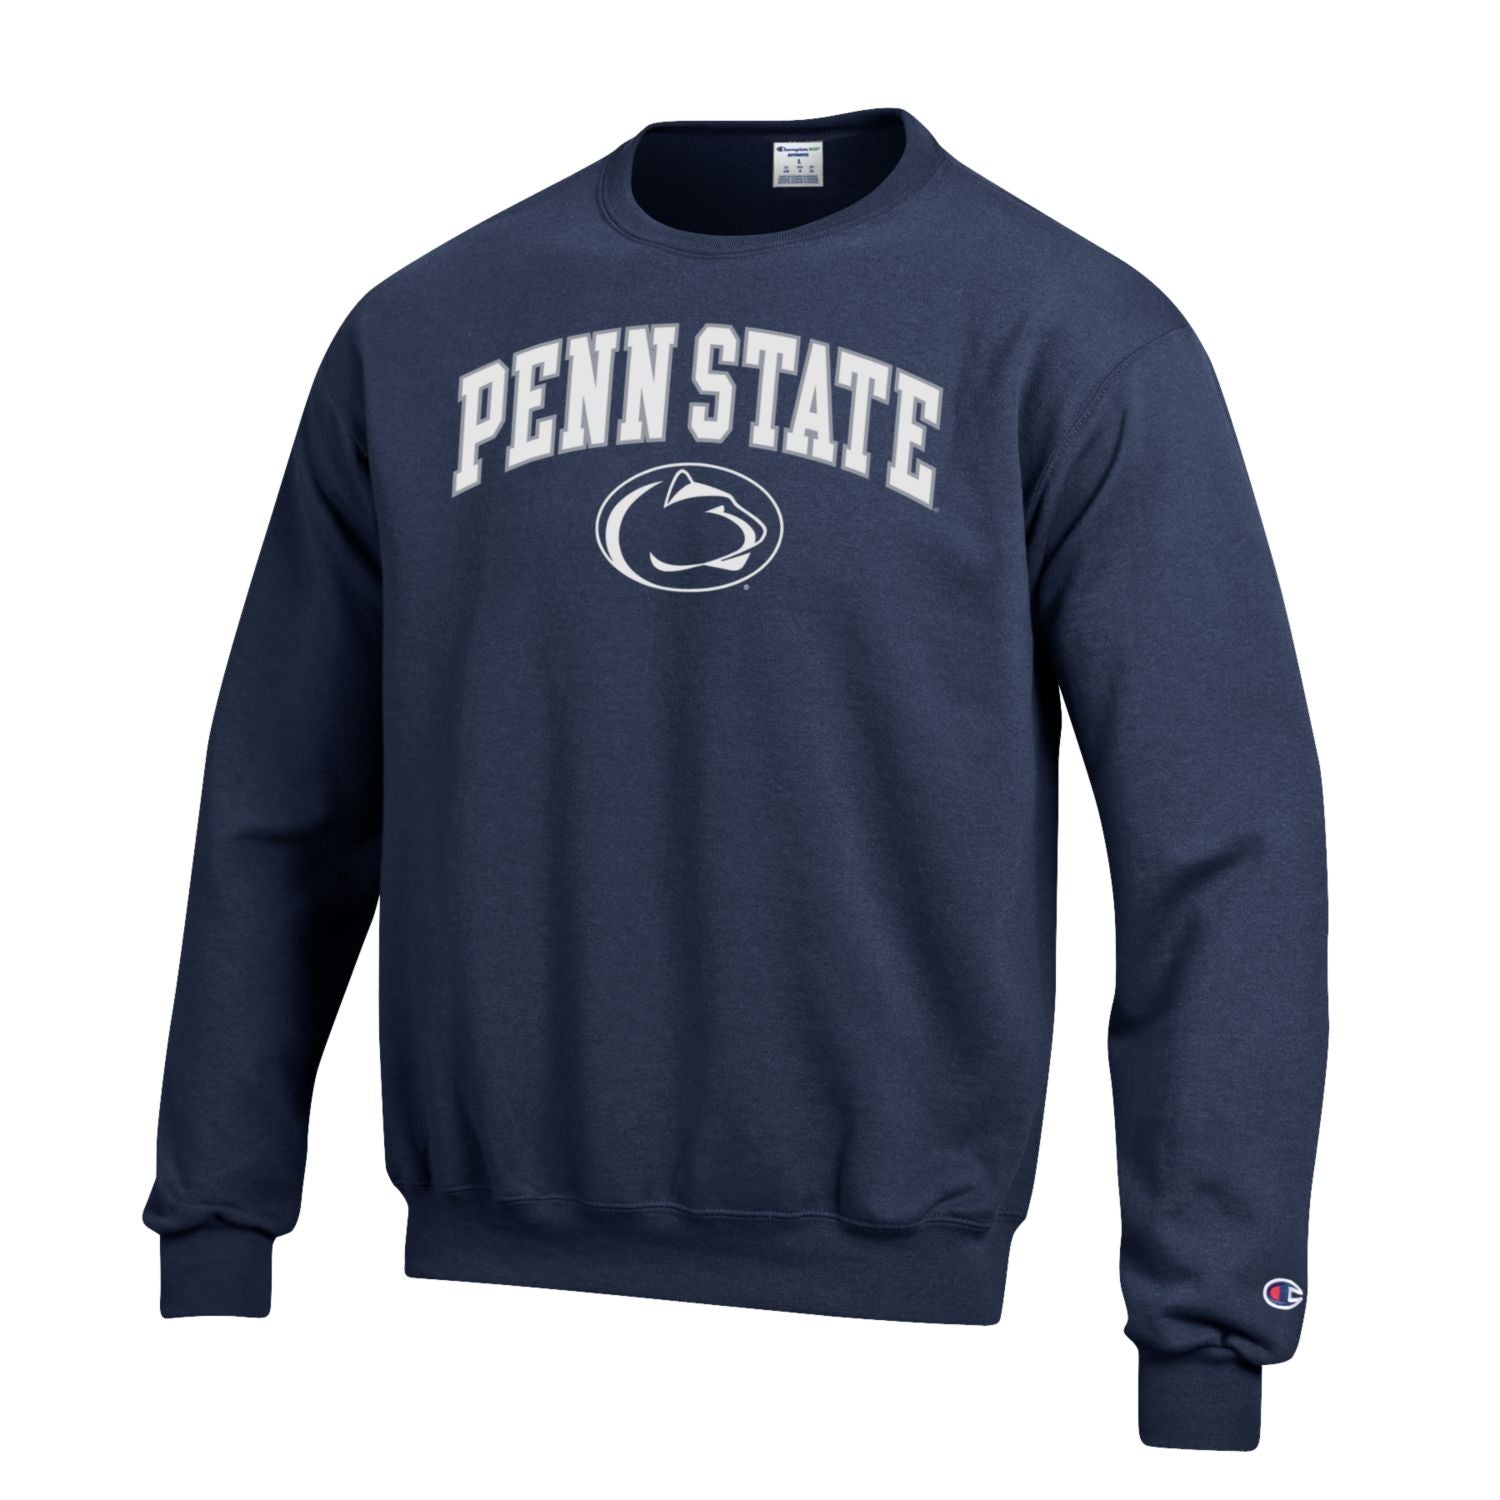 Penn State Champion Men's Sweatshirt 